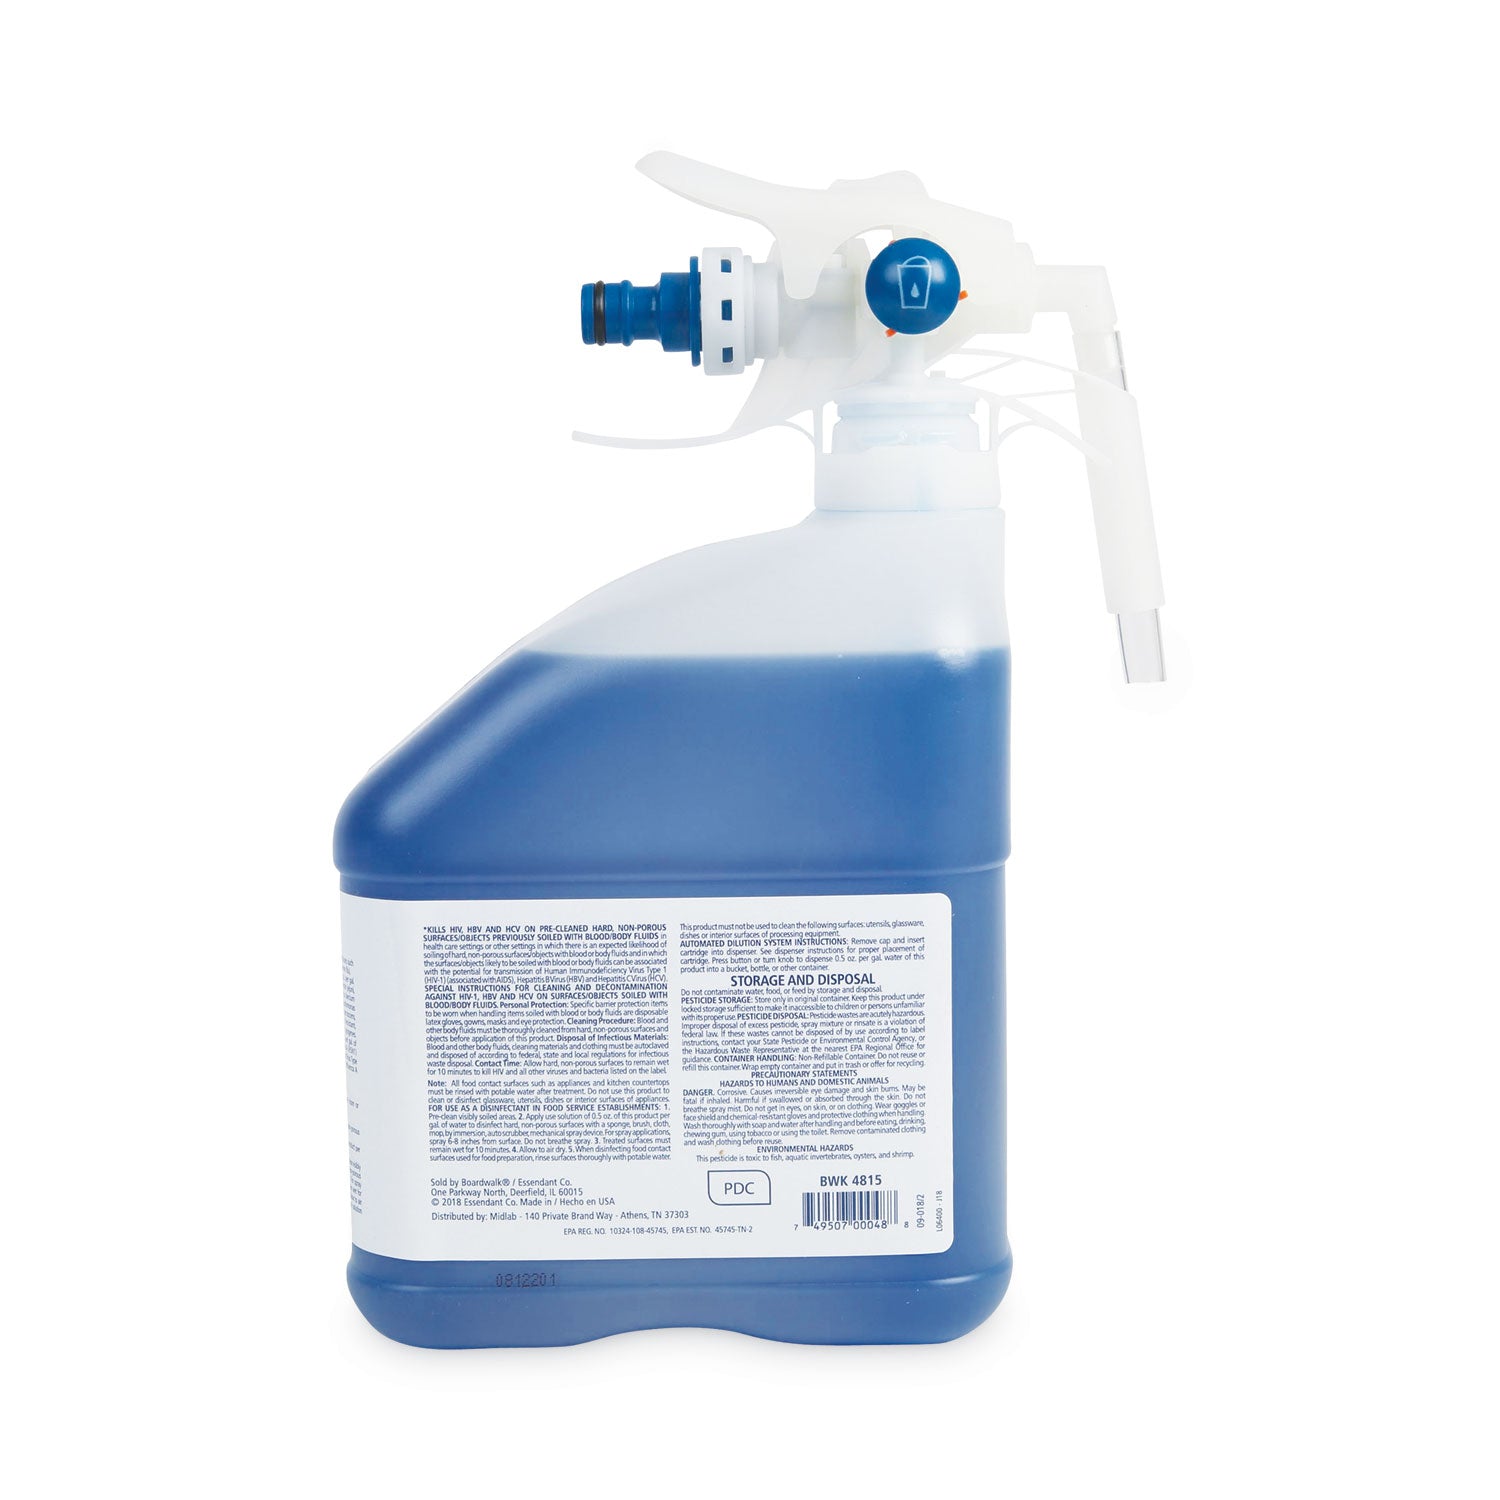 pdc-neutral-disinfectant-floral-scent-3-liter-bottle-2-carton_bwk4815 - 2